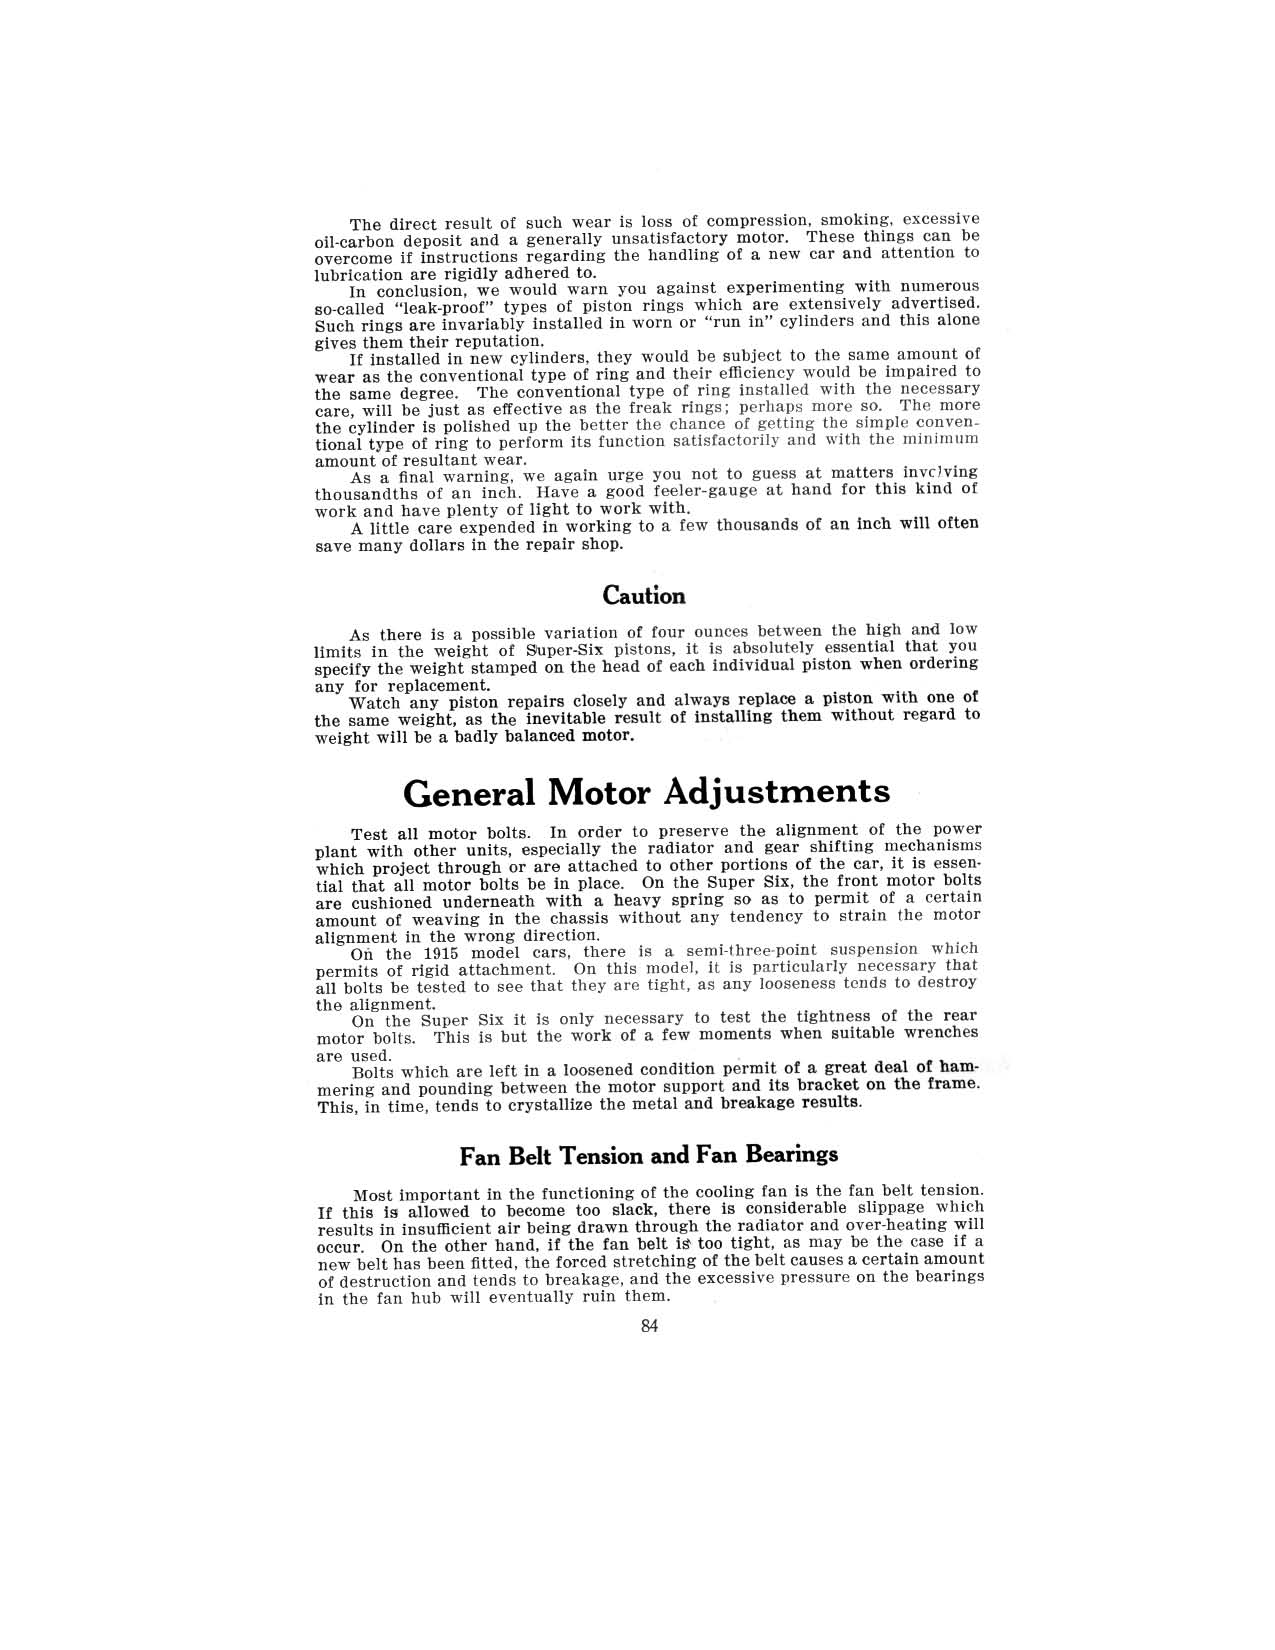 1916-18_Hudson_Super-Six_Service_Manual-086